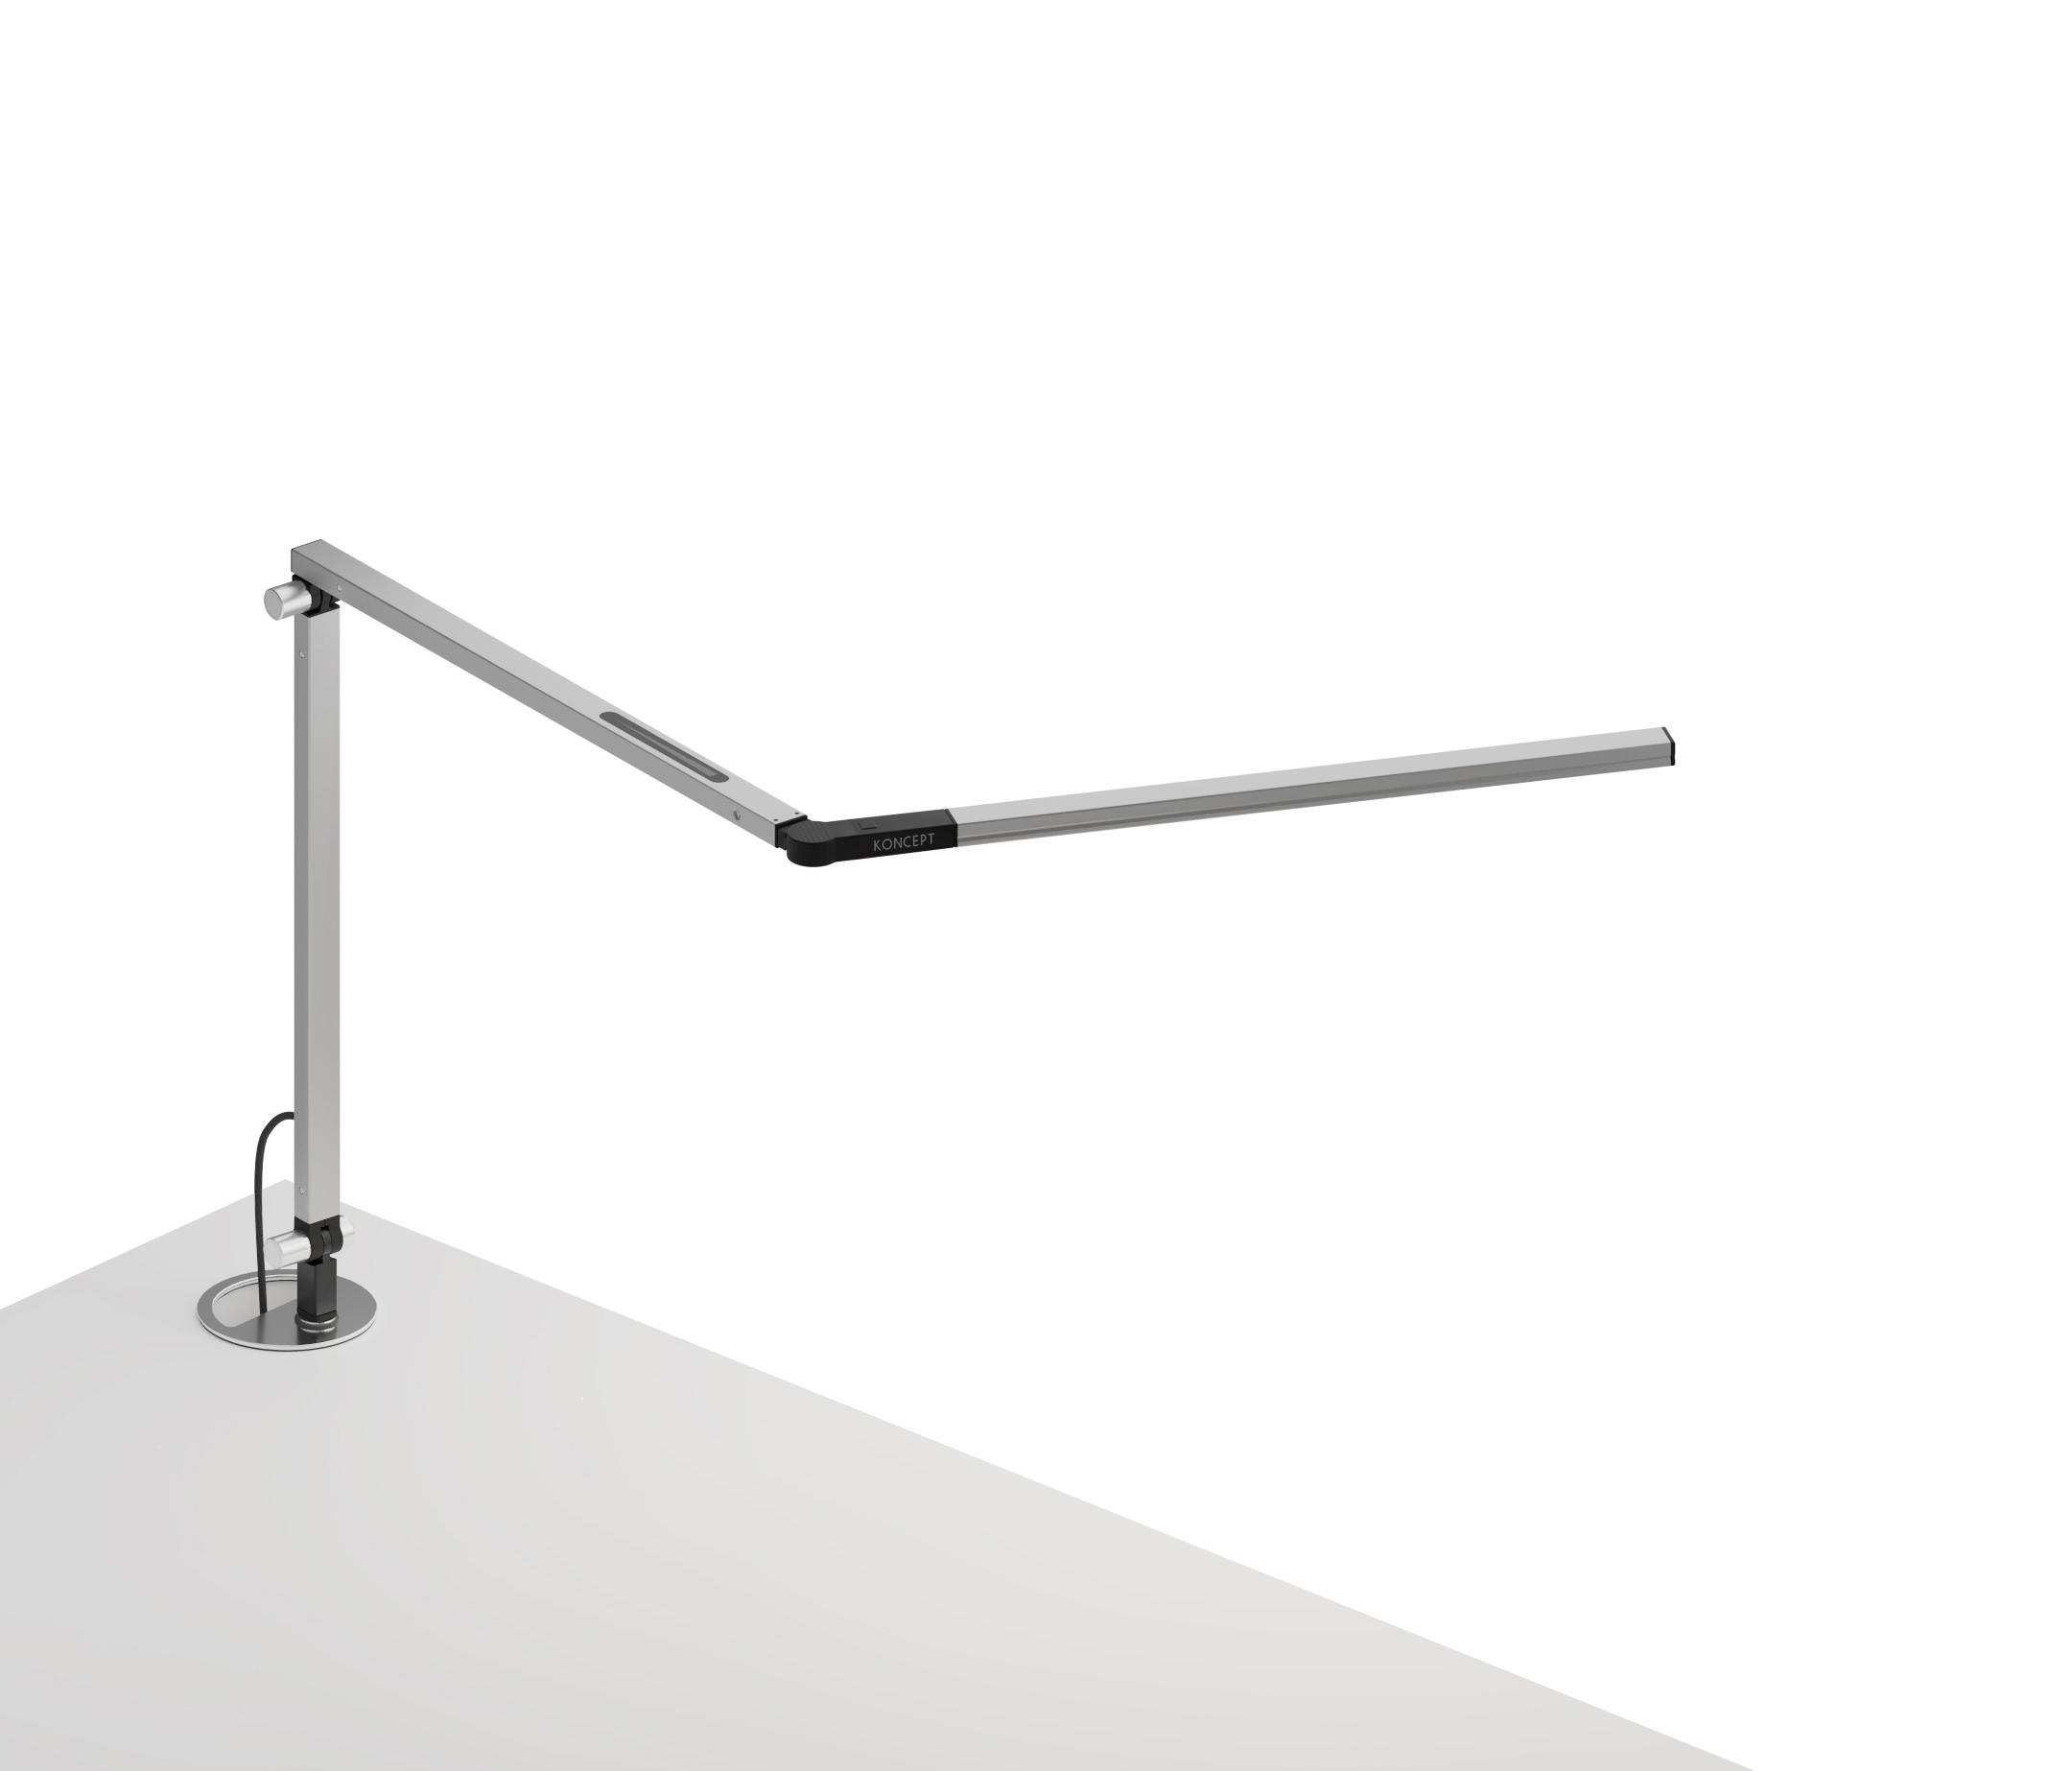 Z-Bar mini Desk Lamp with grommet mount, Silver | Architonic